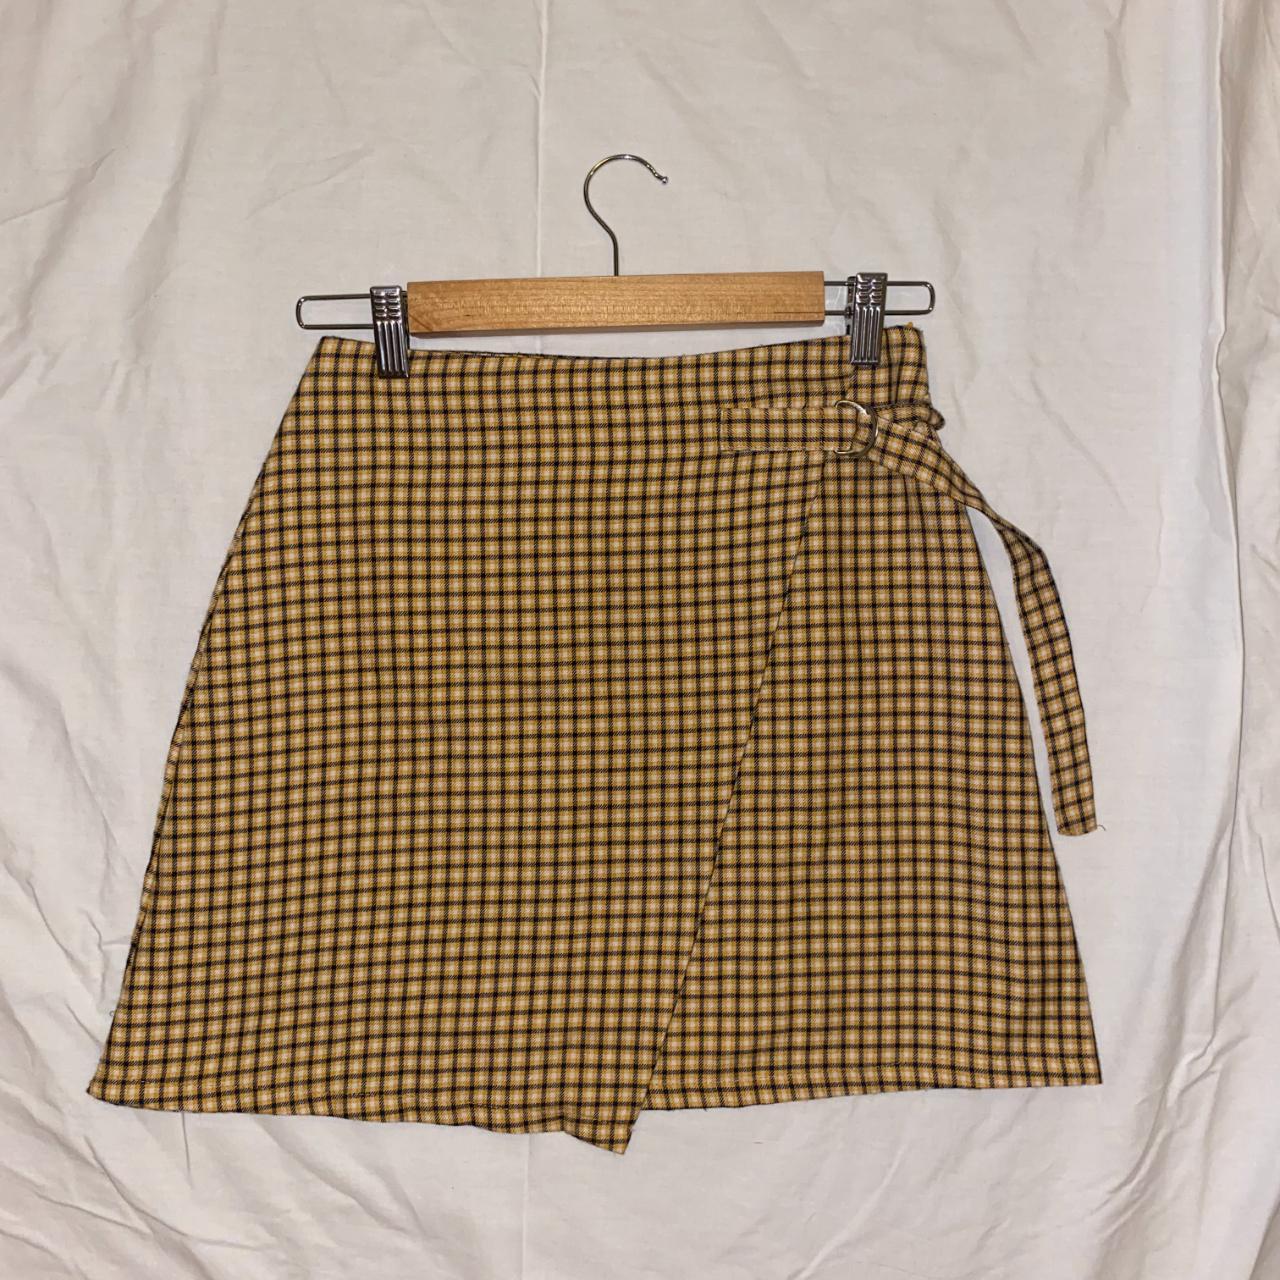 Cotton on skirt, rarely worn. - Depop